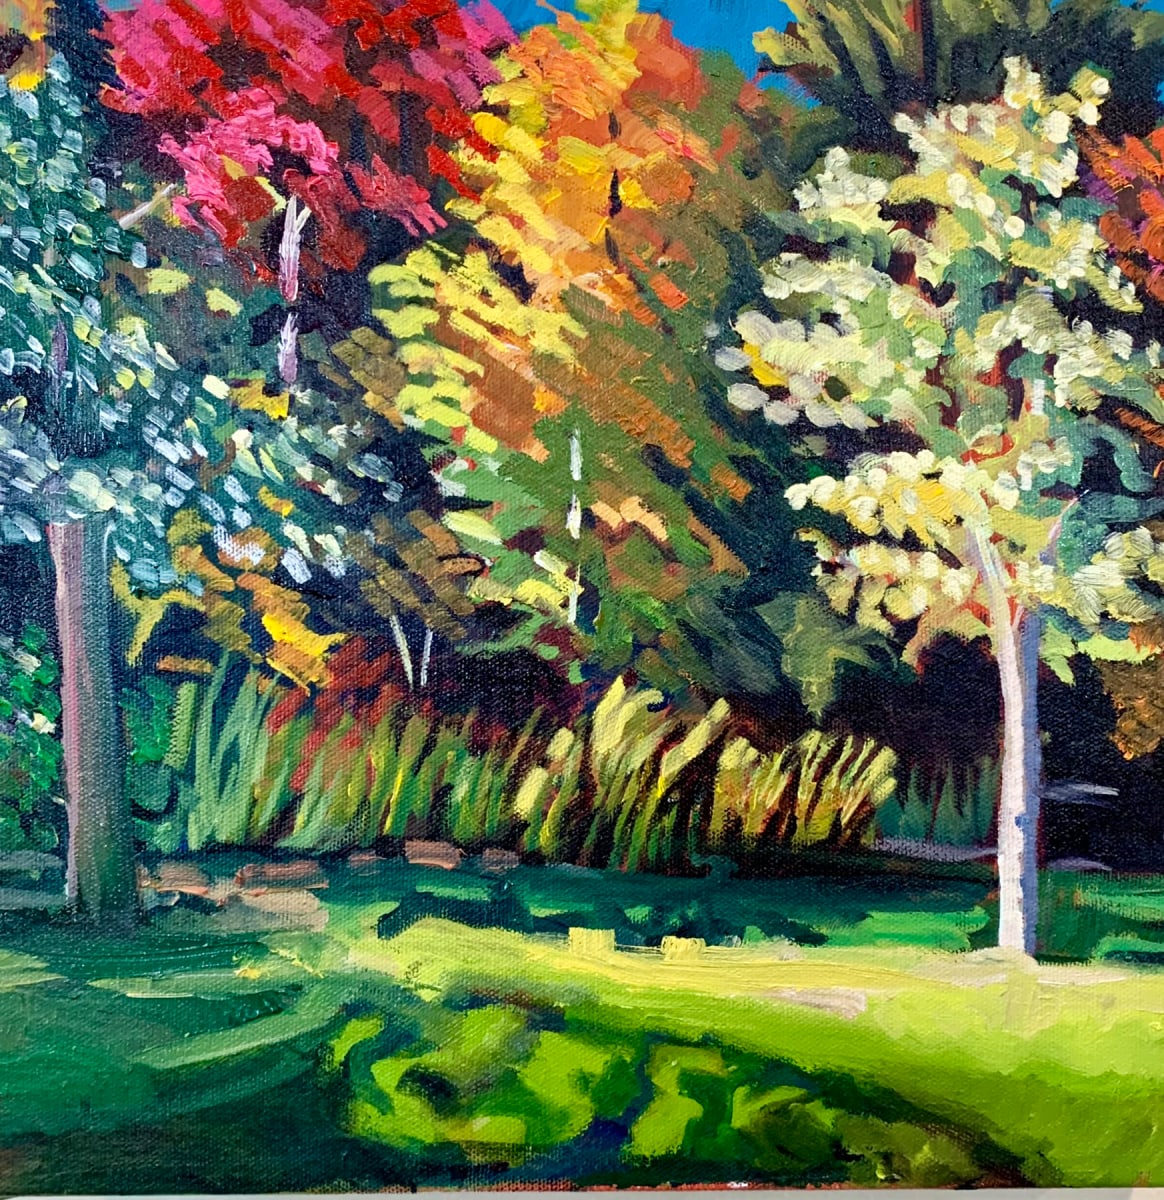 Colour Wheel Trees, Jack Darling Memorial Park by Lynne Ryall 